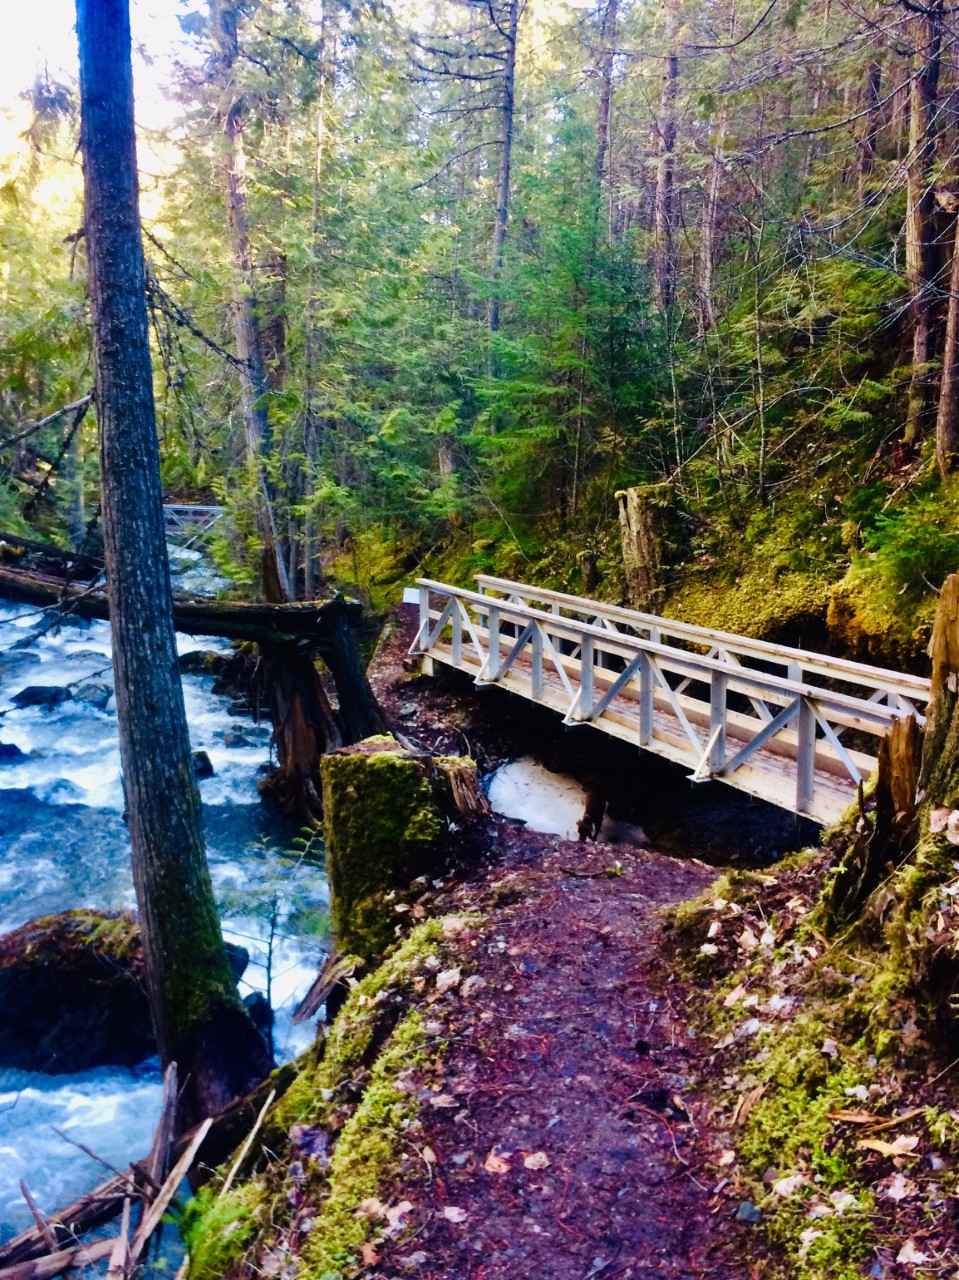 Bear Creek Flume Trails: Explore historic Bear Creek Flume Trails. This 8.5 km trails crosses 7 unique bridges to an impressive waterfall.